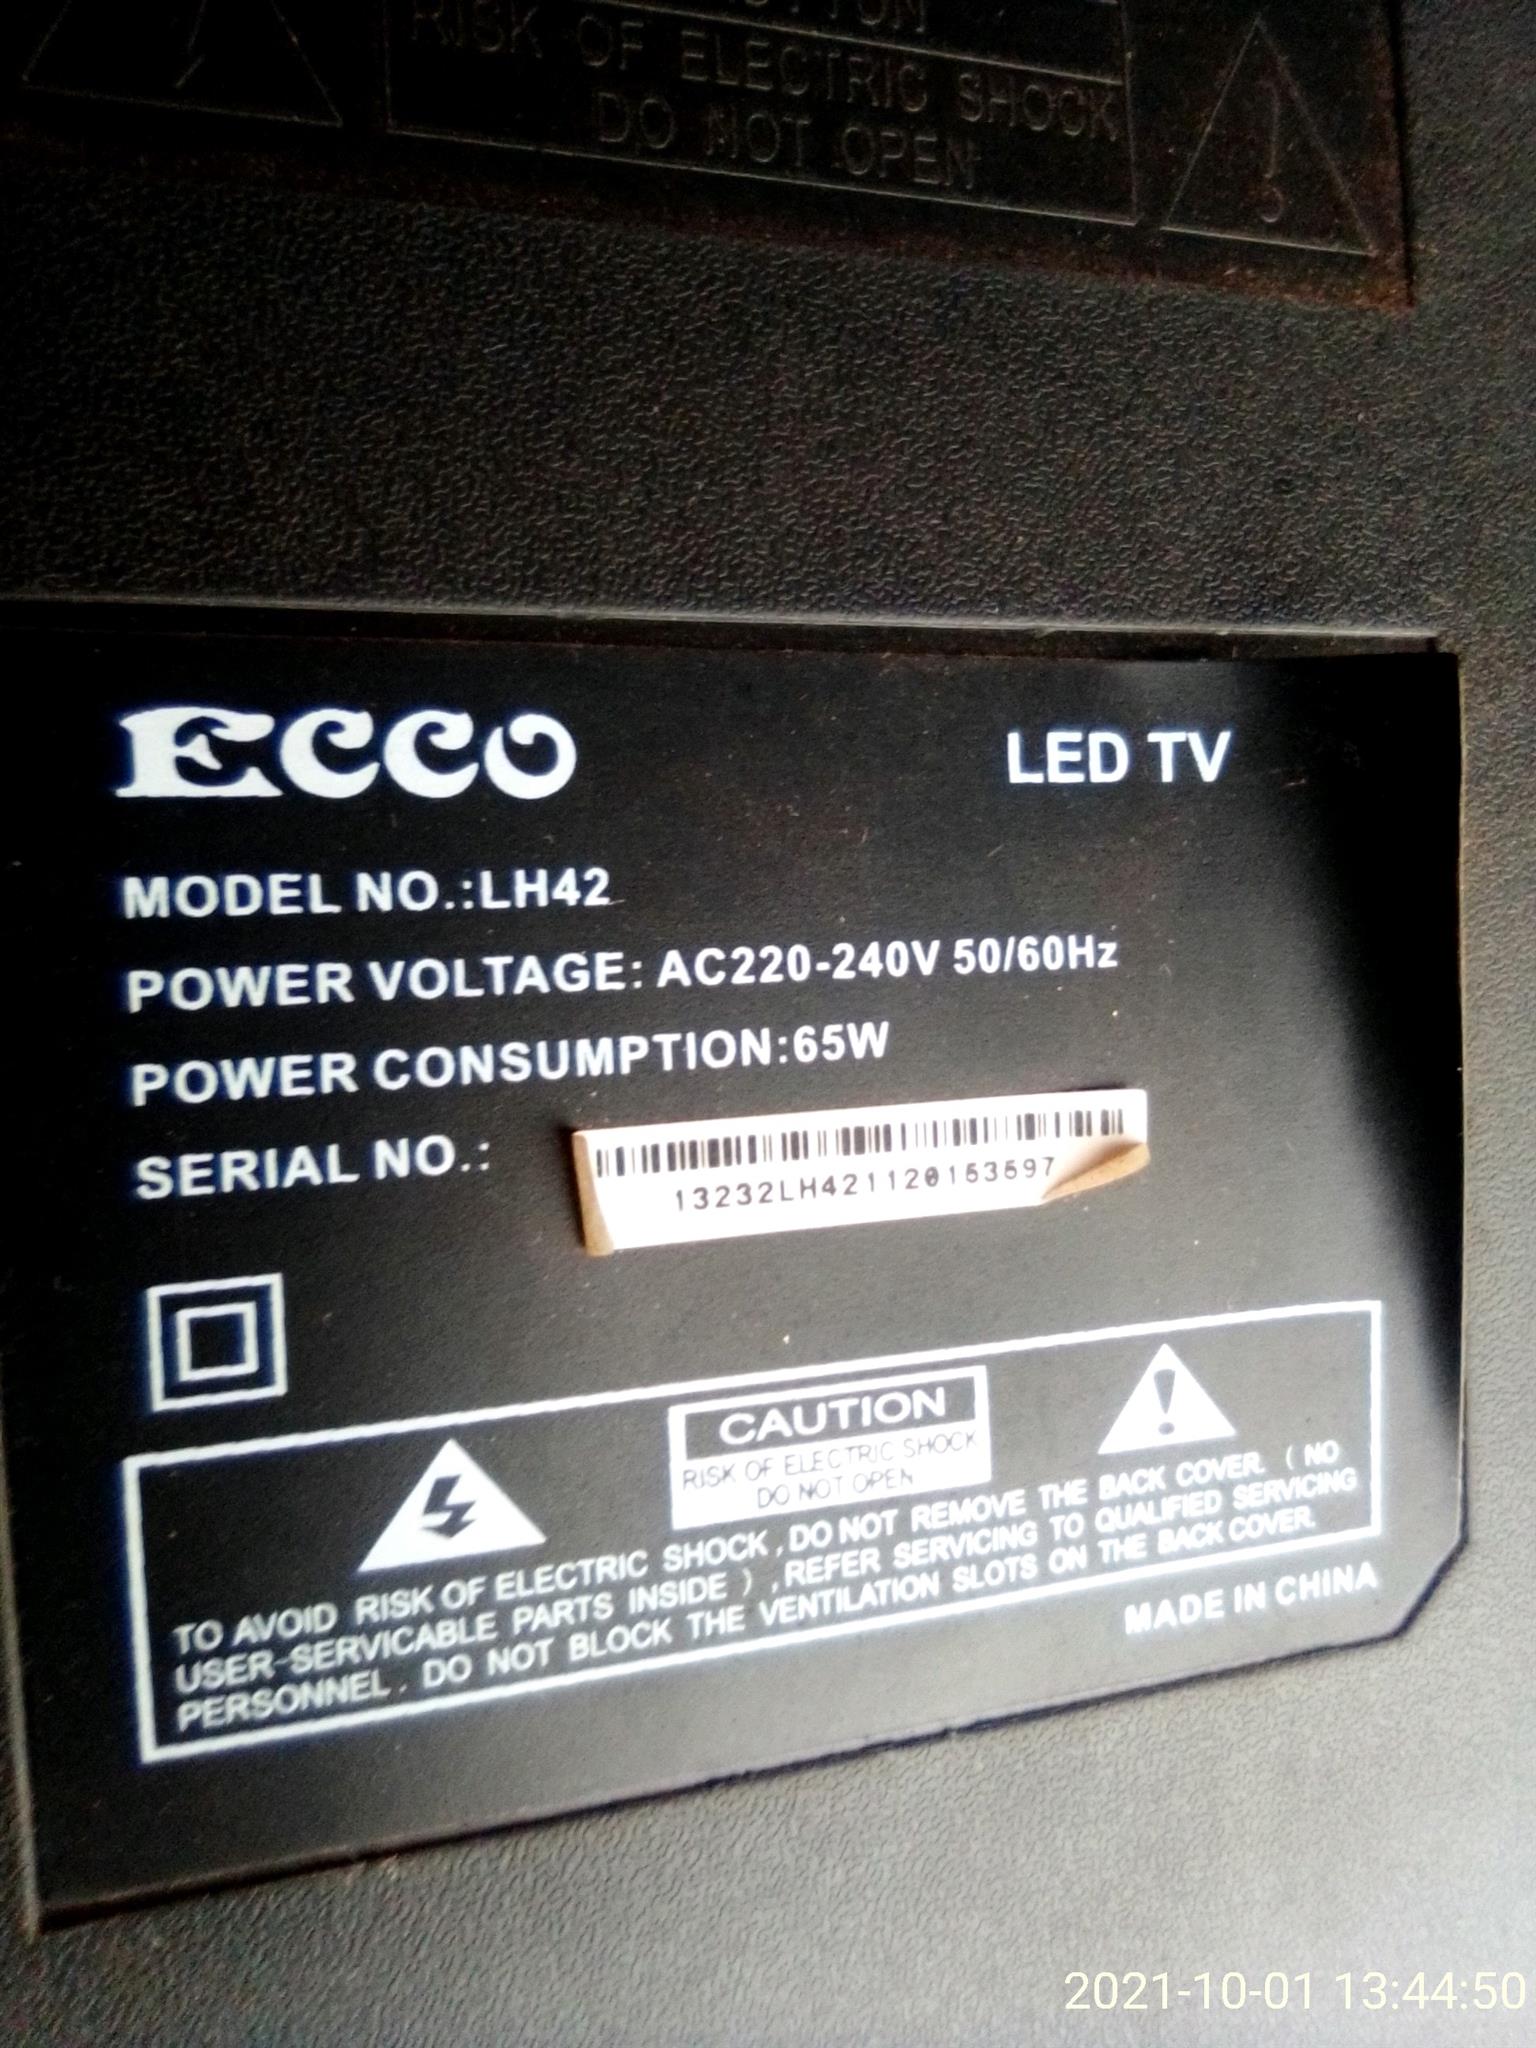 32 Ecco LED TV - Electronics Trader